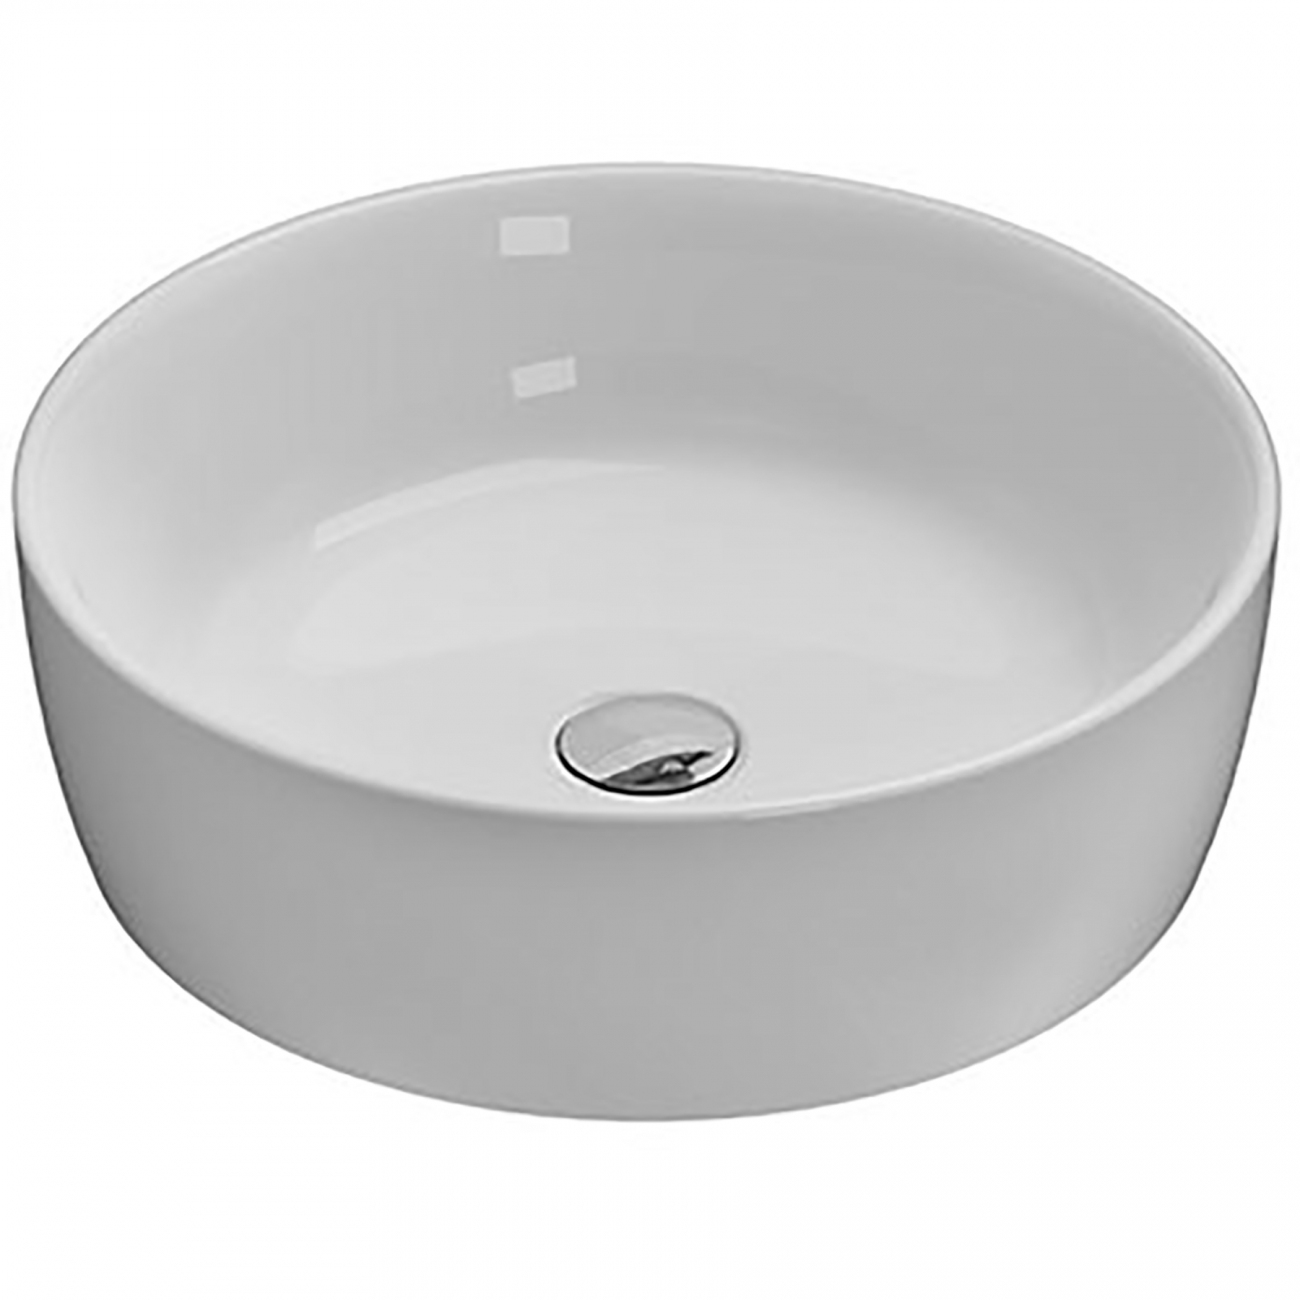 Globo Bowl+ countertop washbasin